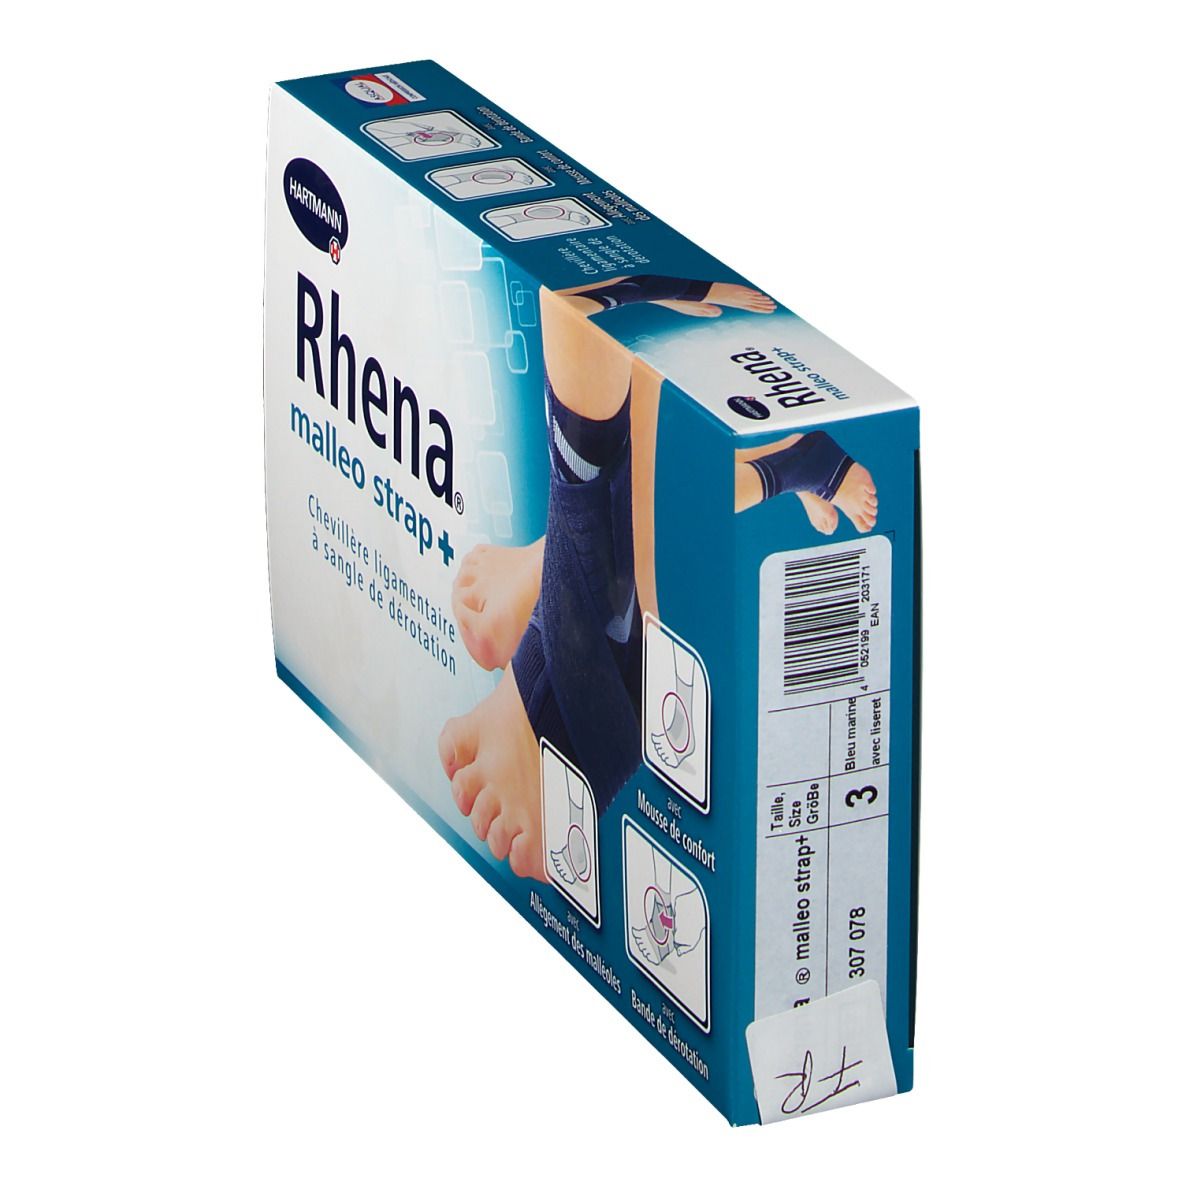 Rhena® malleo strap+ Taille 3